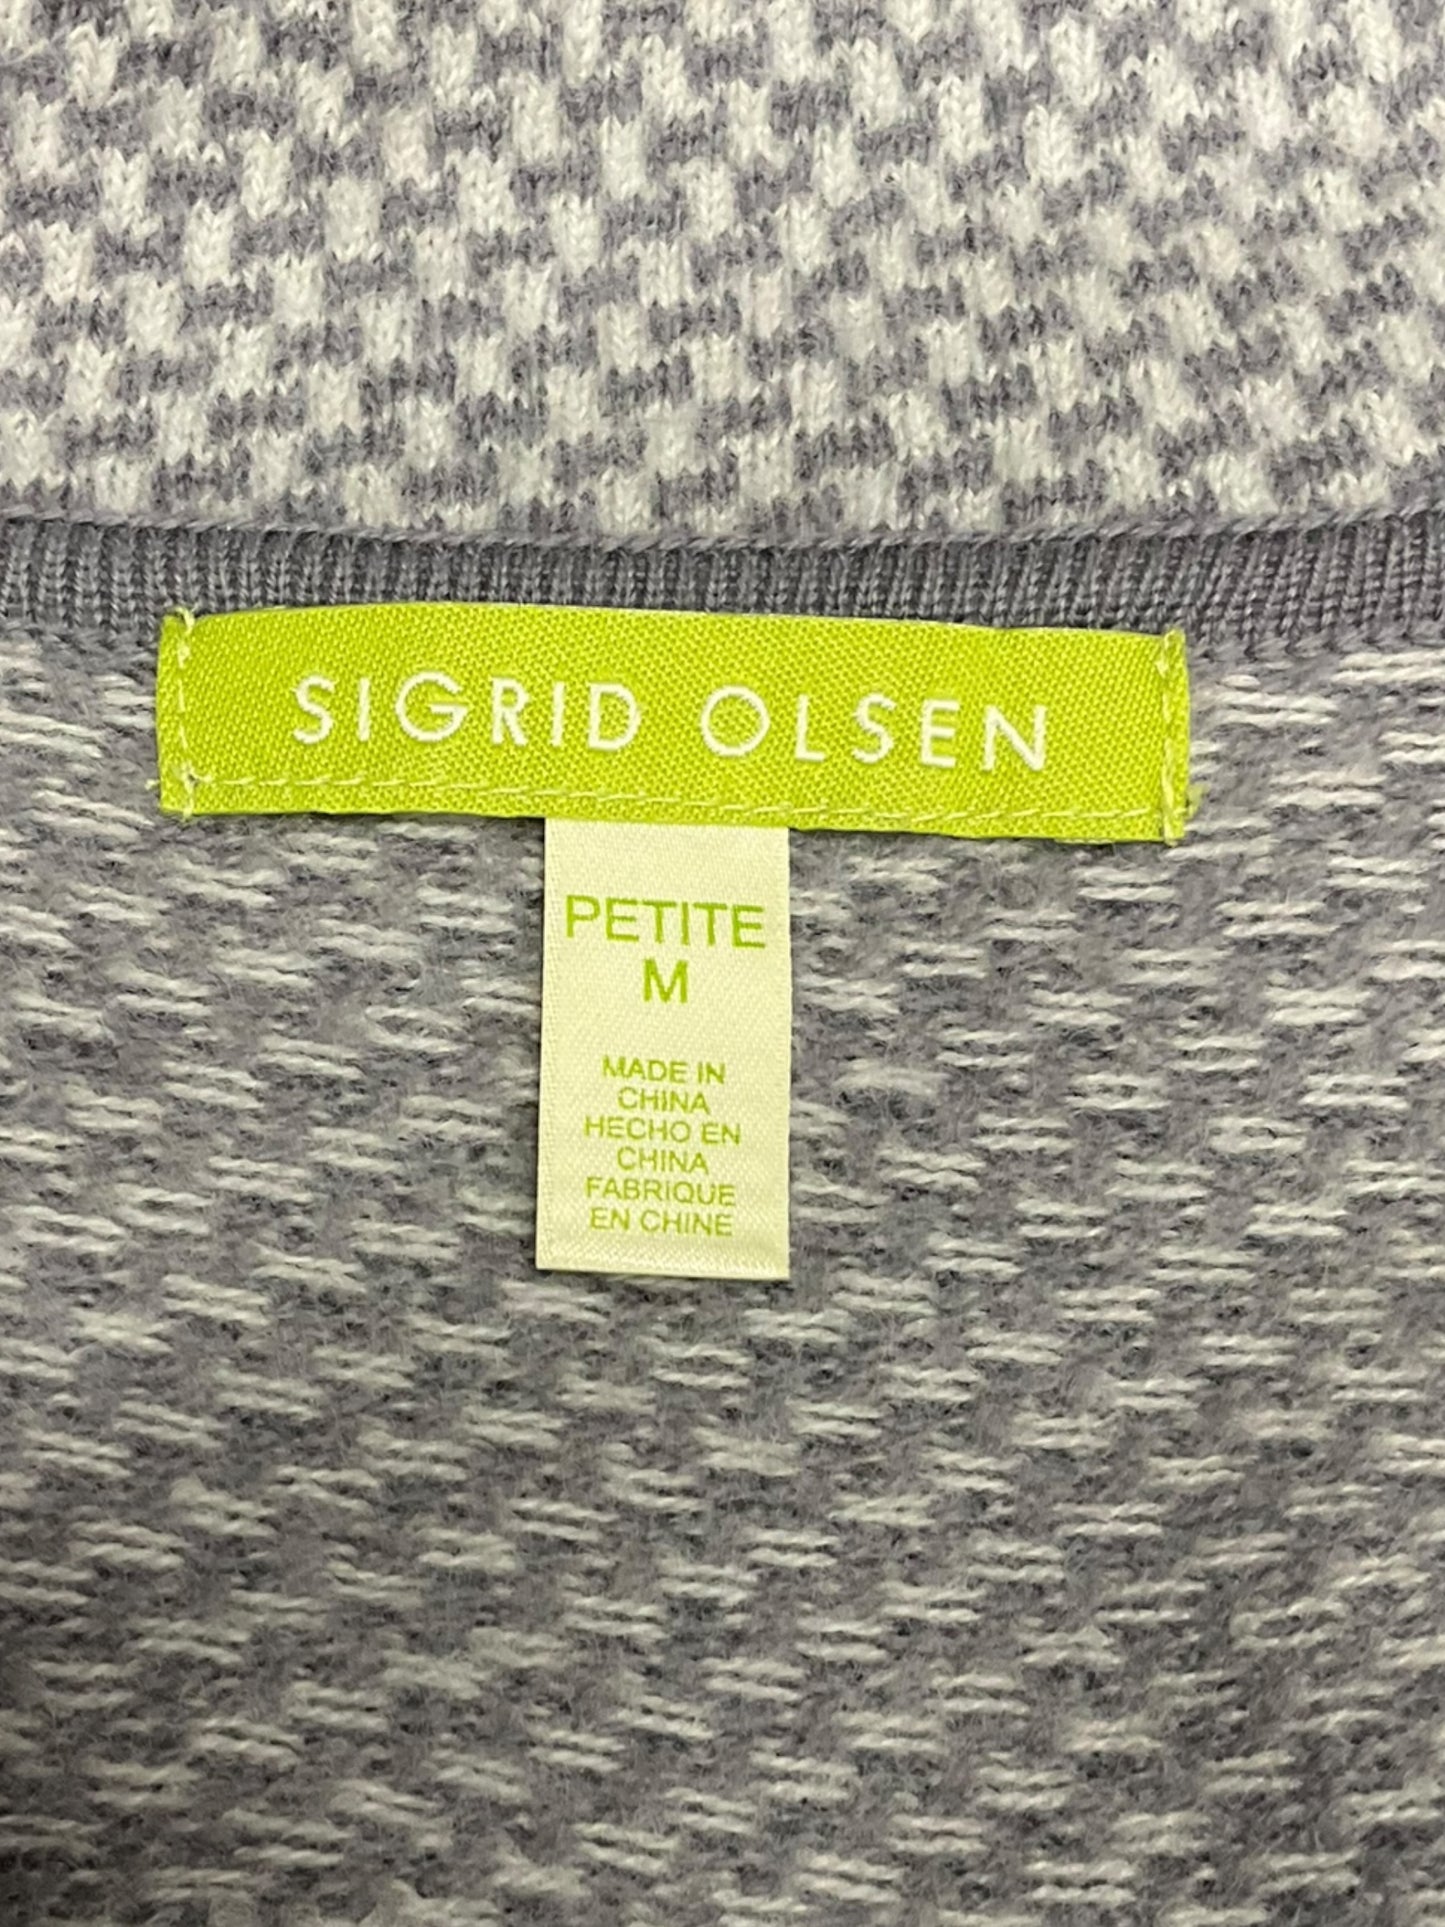 Jacket Other By Sigrid Olsen  Size: M